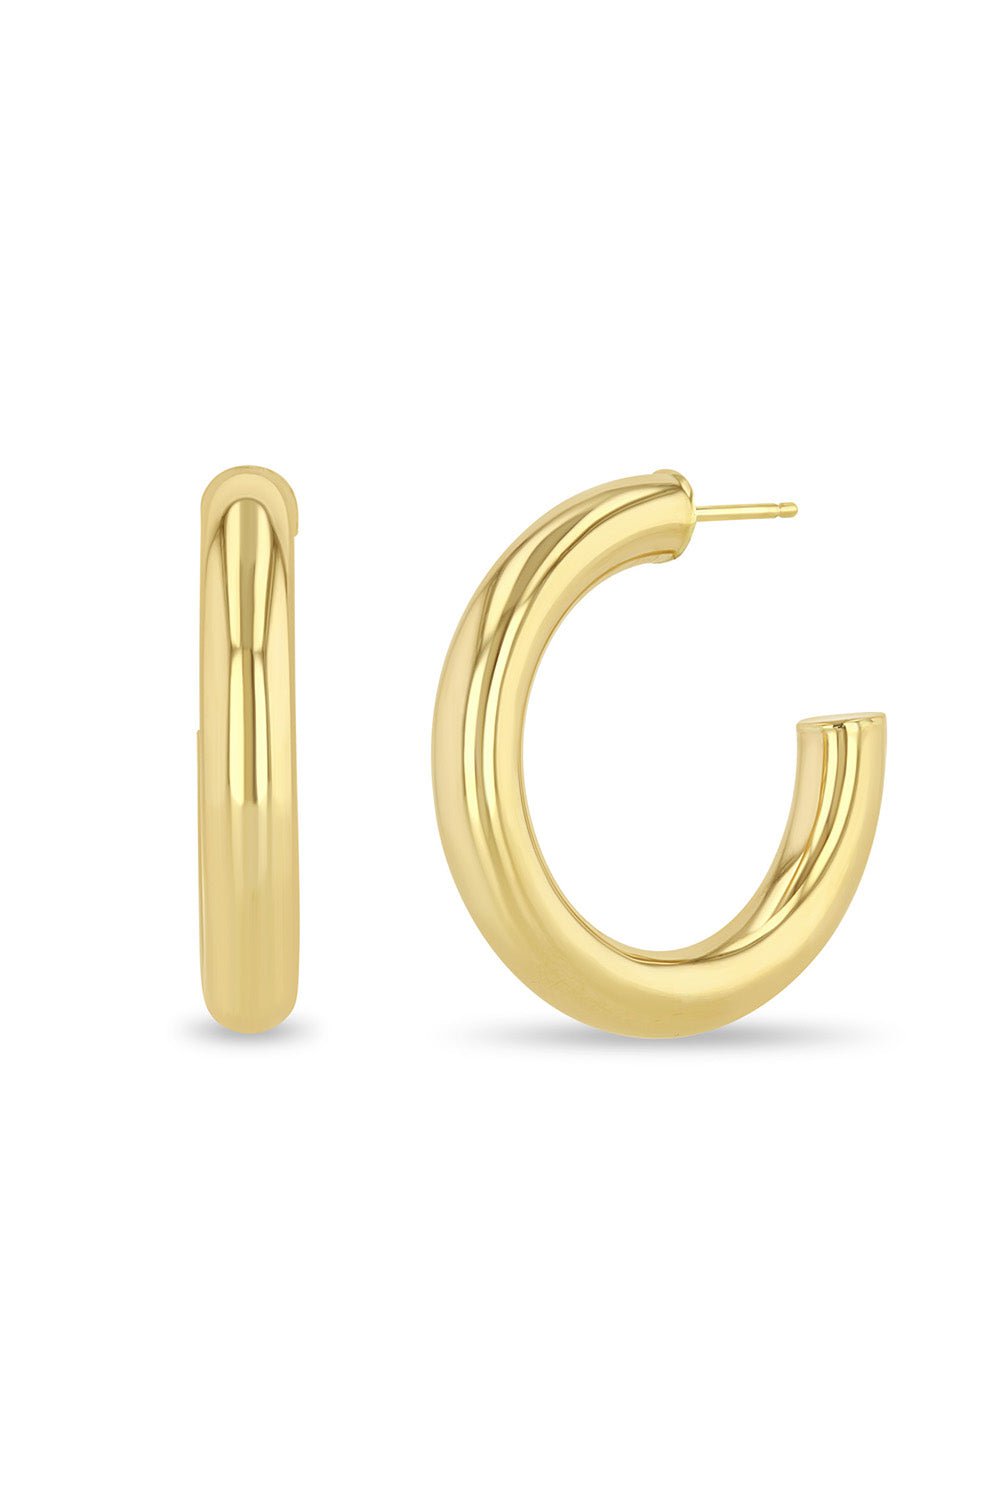 ZOE CHICCO-Medium Tube Hoop Earrings-YELLOW GOLD